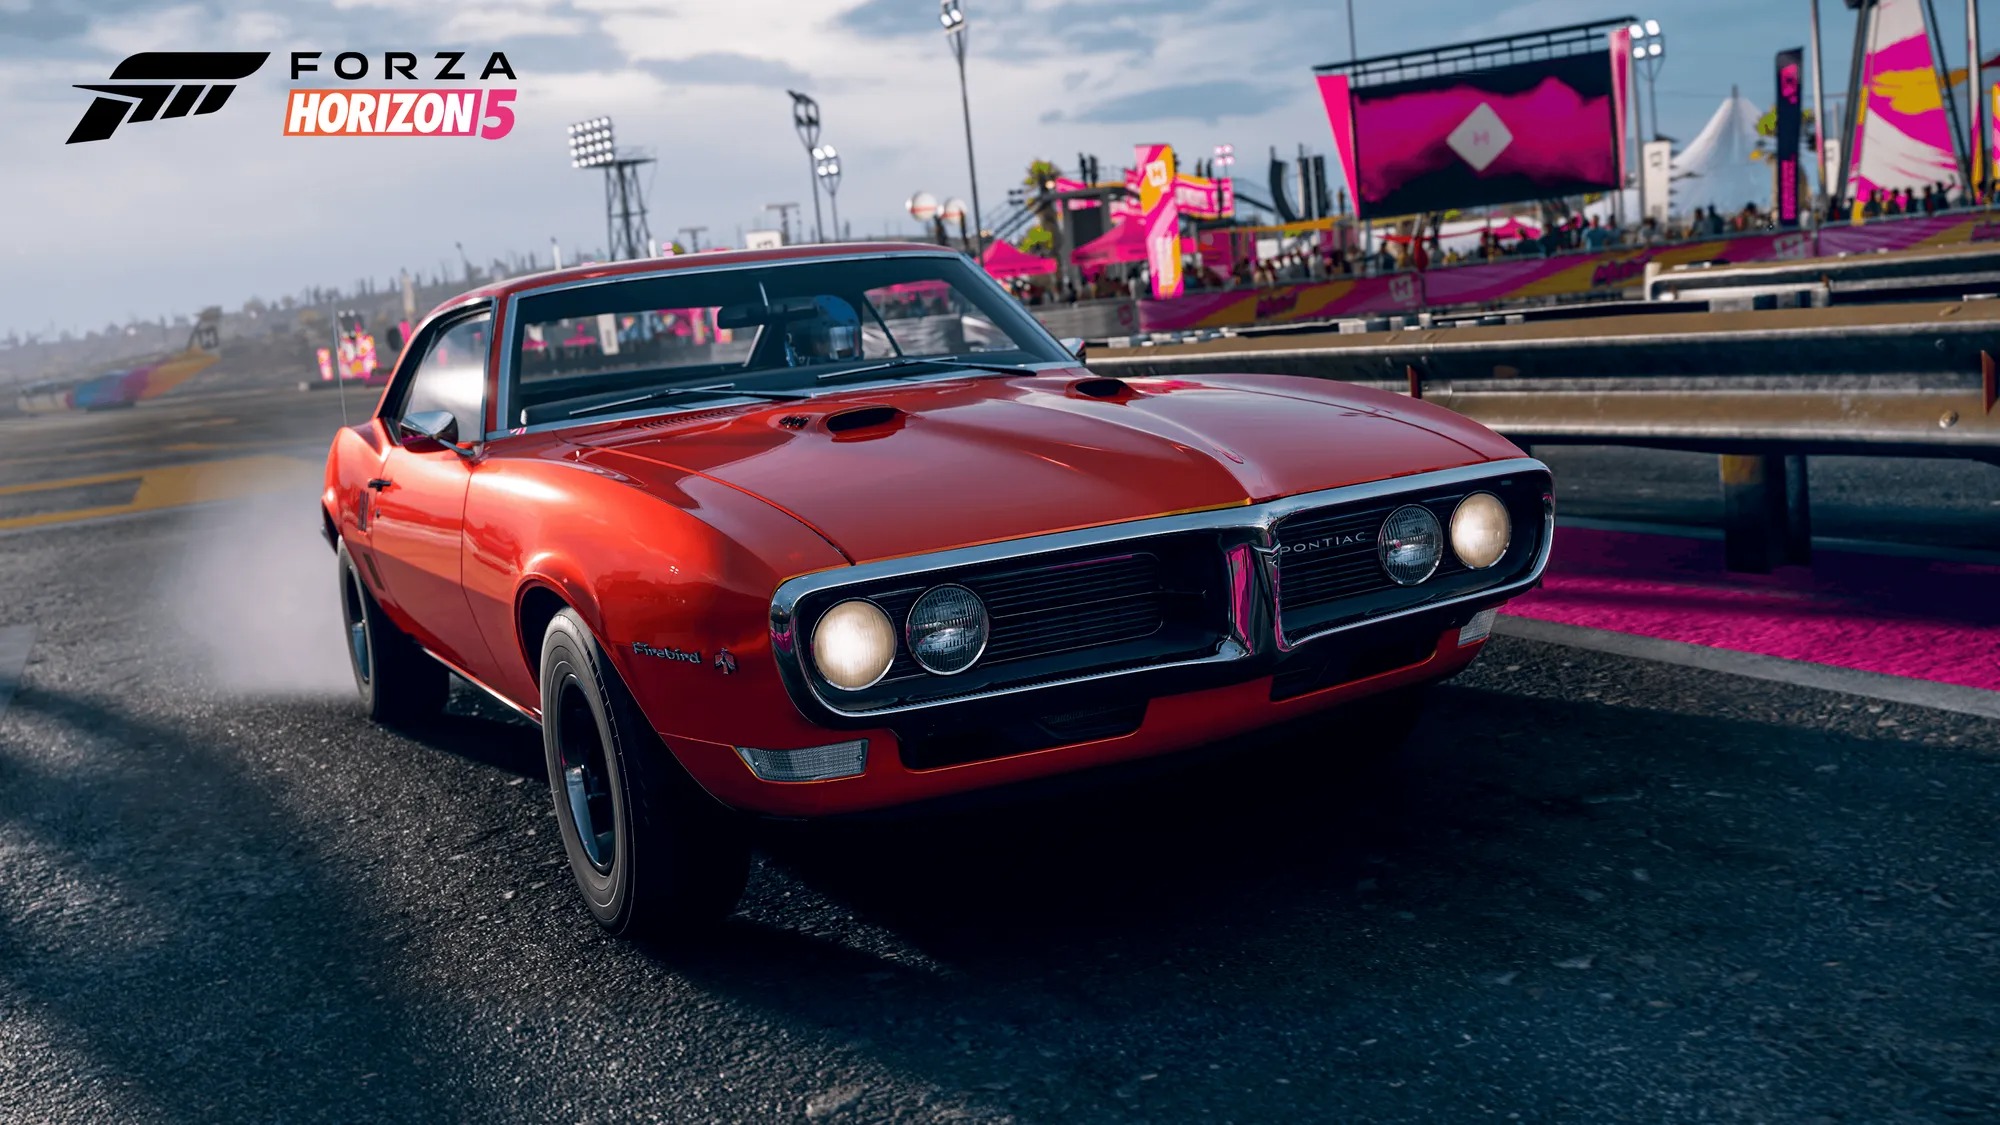 Image of Forza Horizon 5 American Automotive.